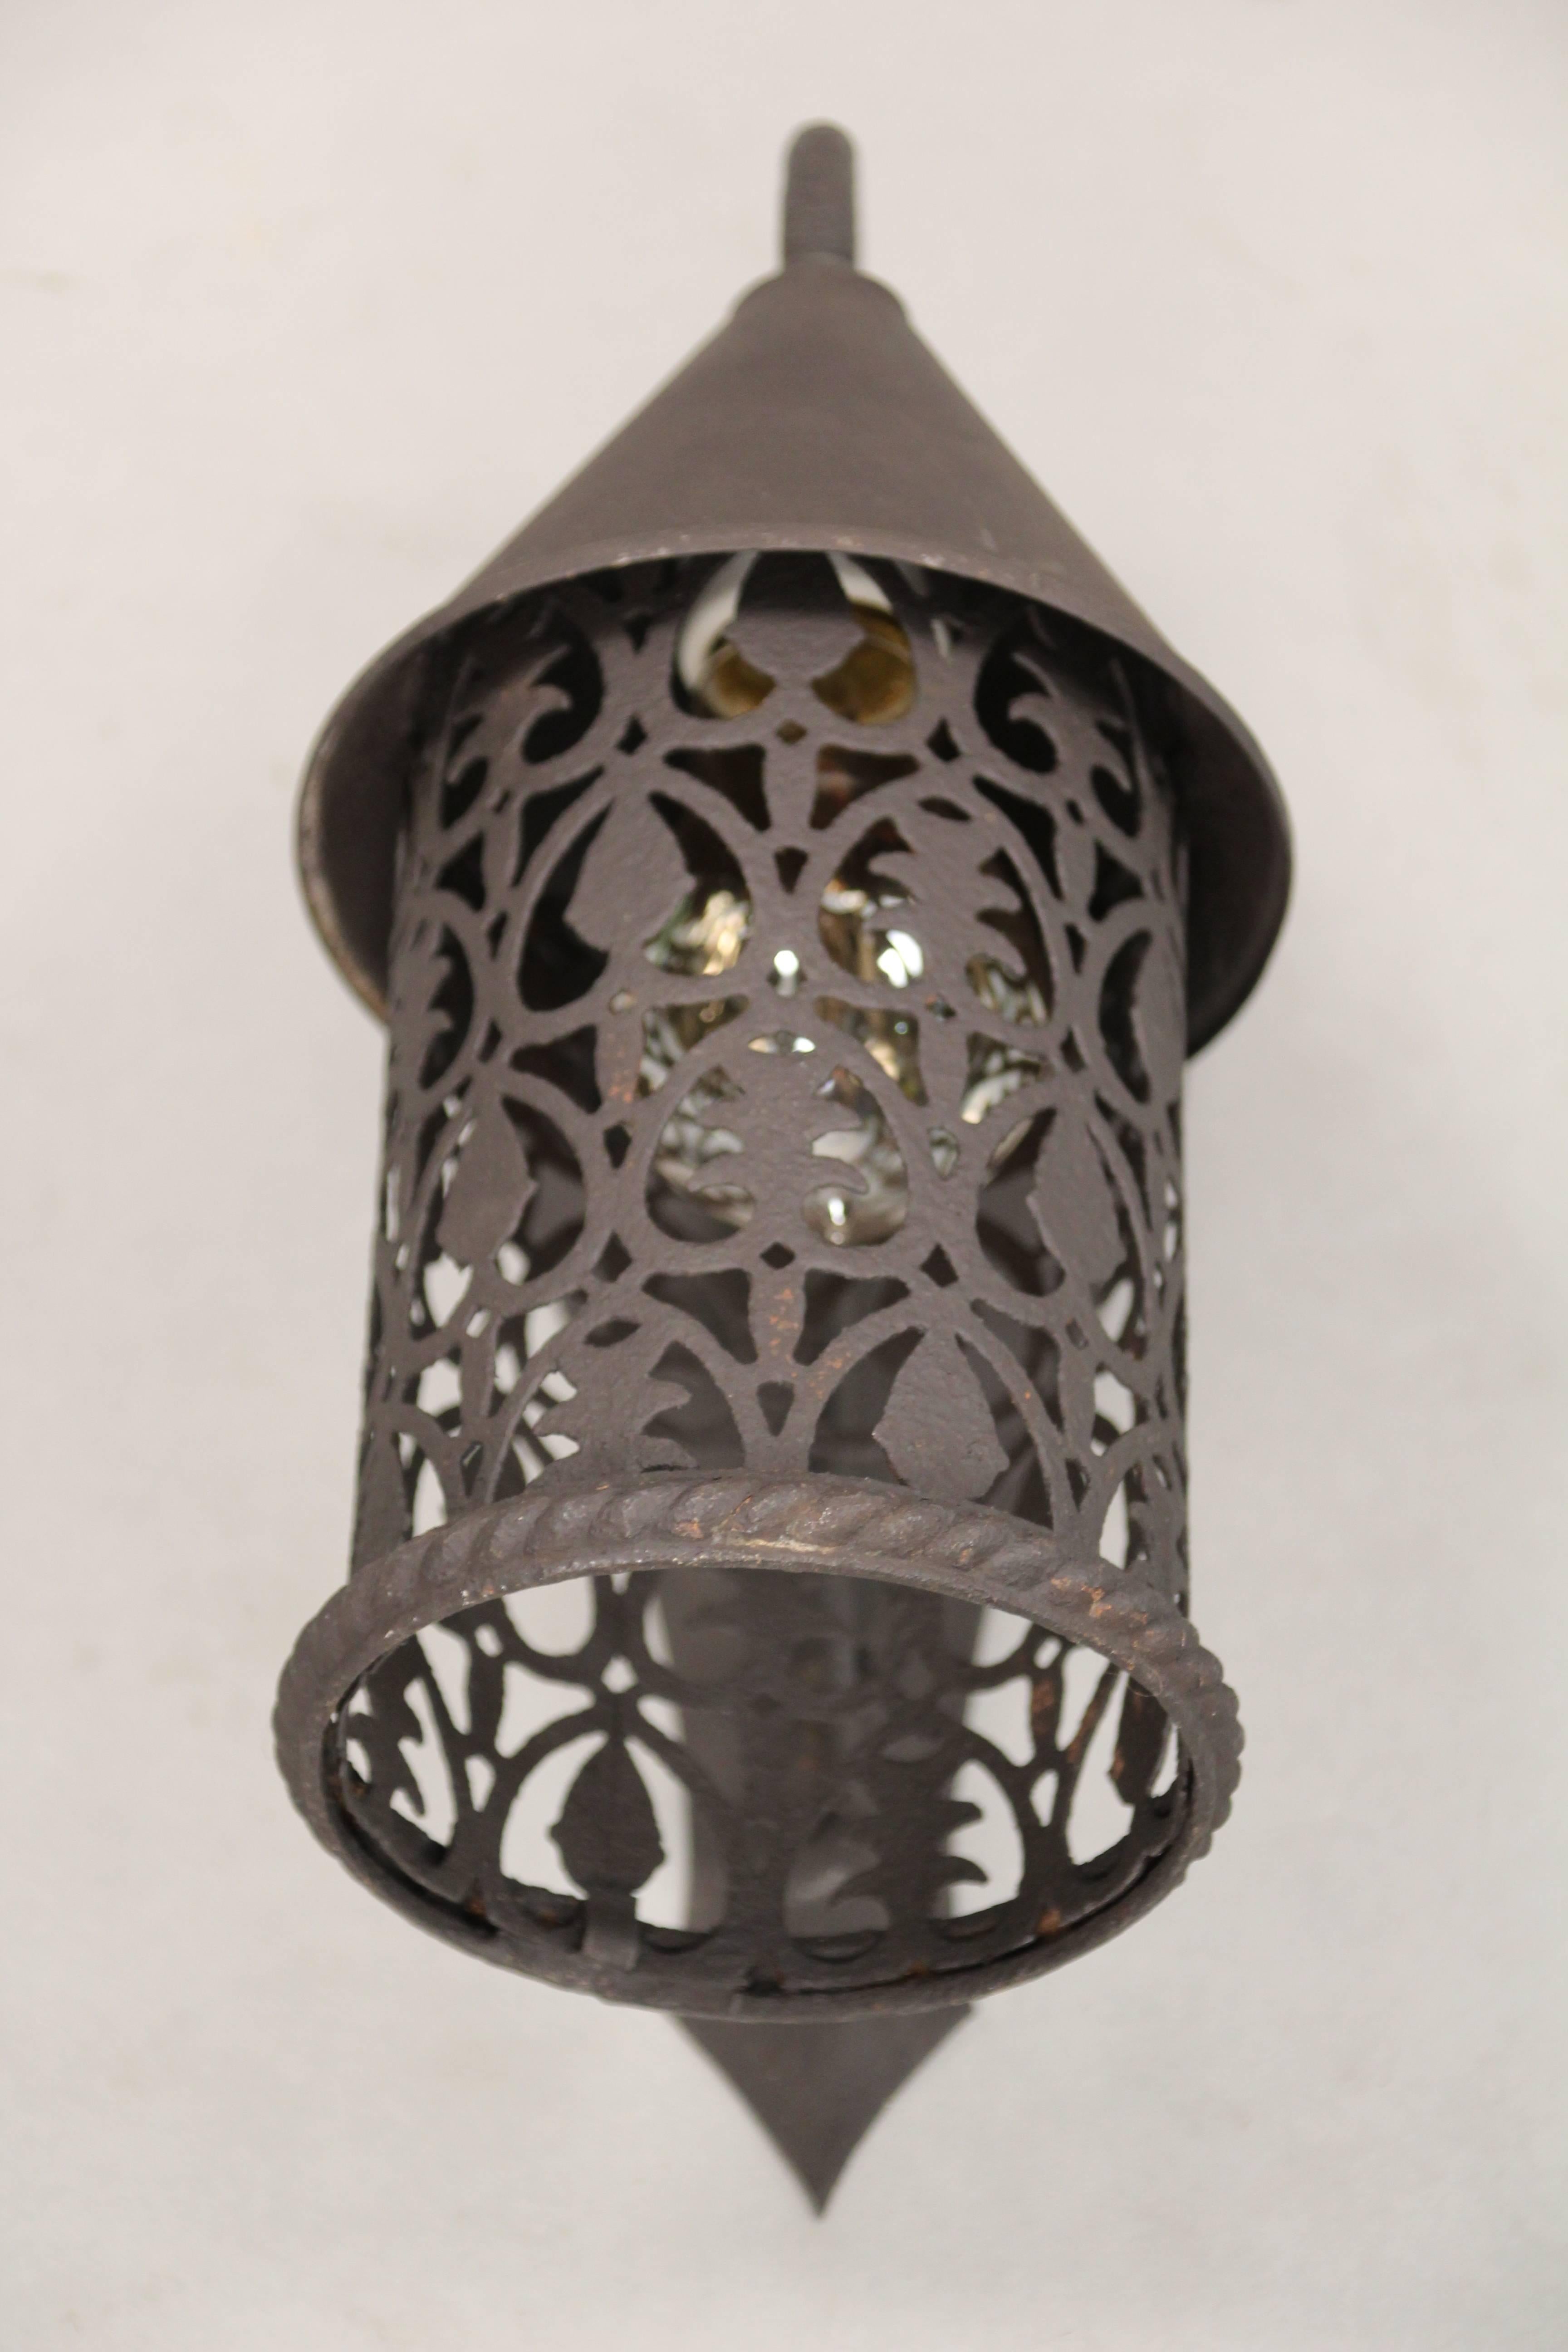 American Antique Spanish Revival 1920s Pierced Exterior Iron Lantern